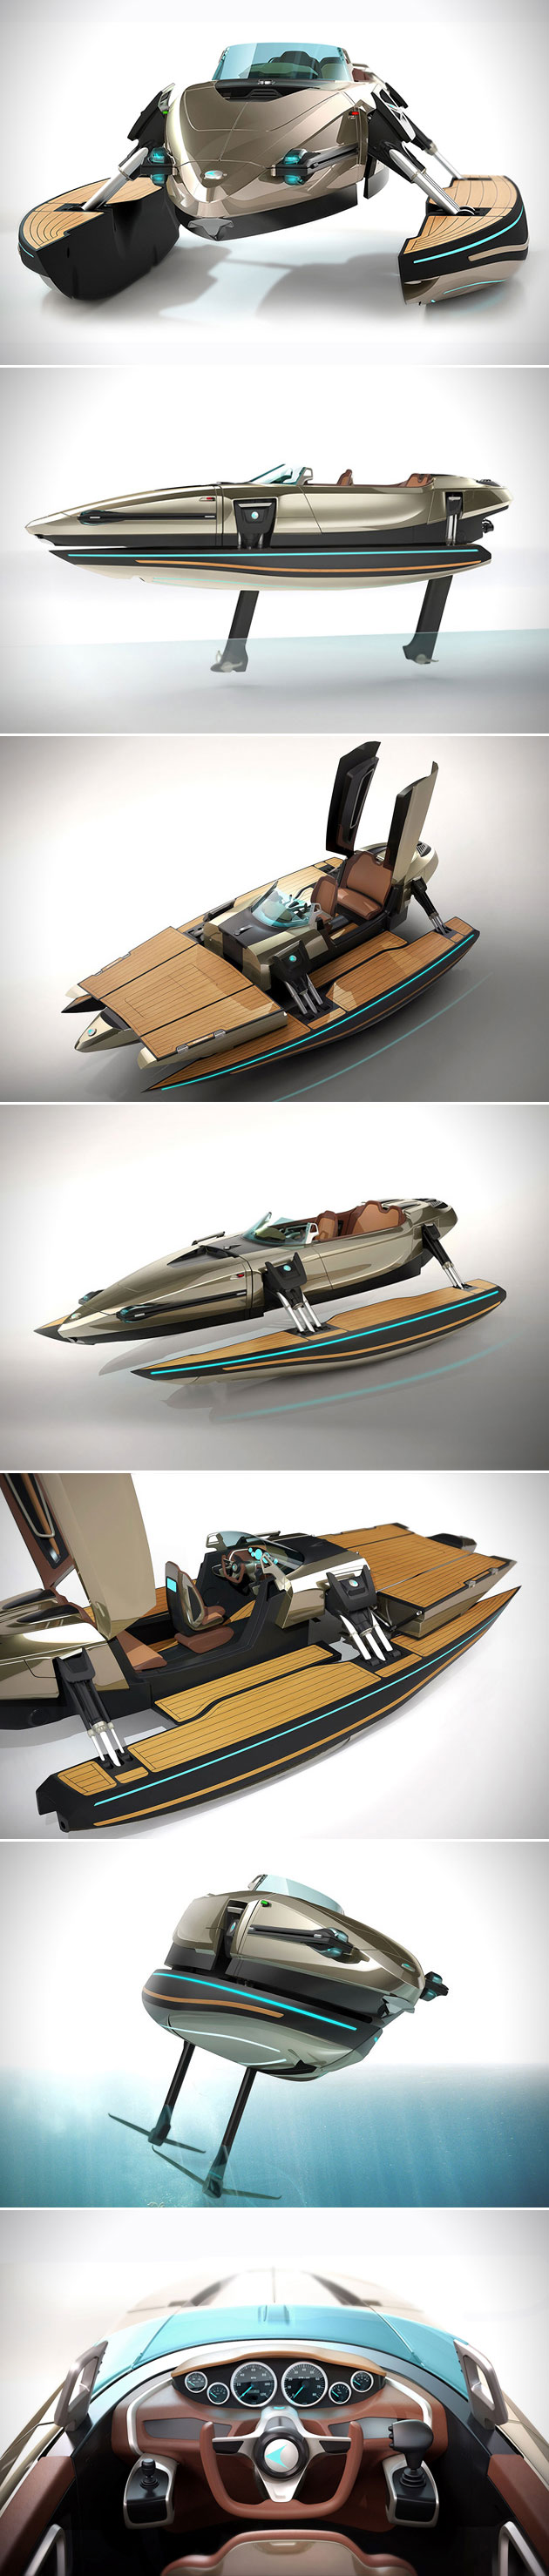 kormaran-convertible-boat-transformer